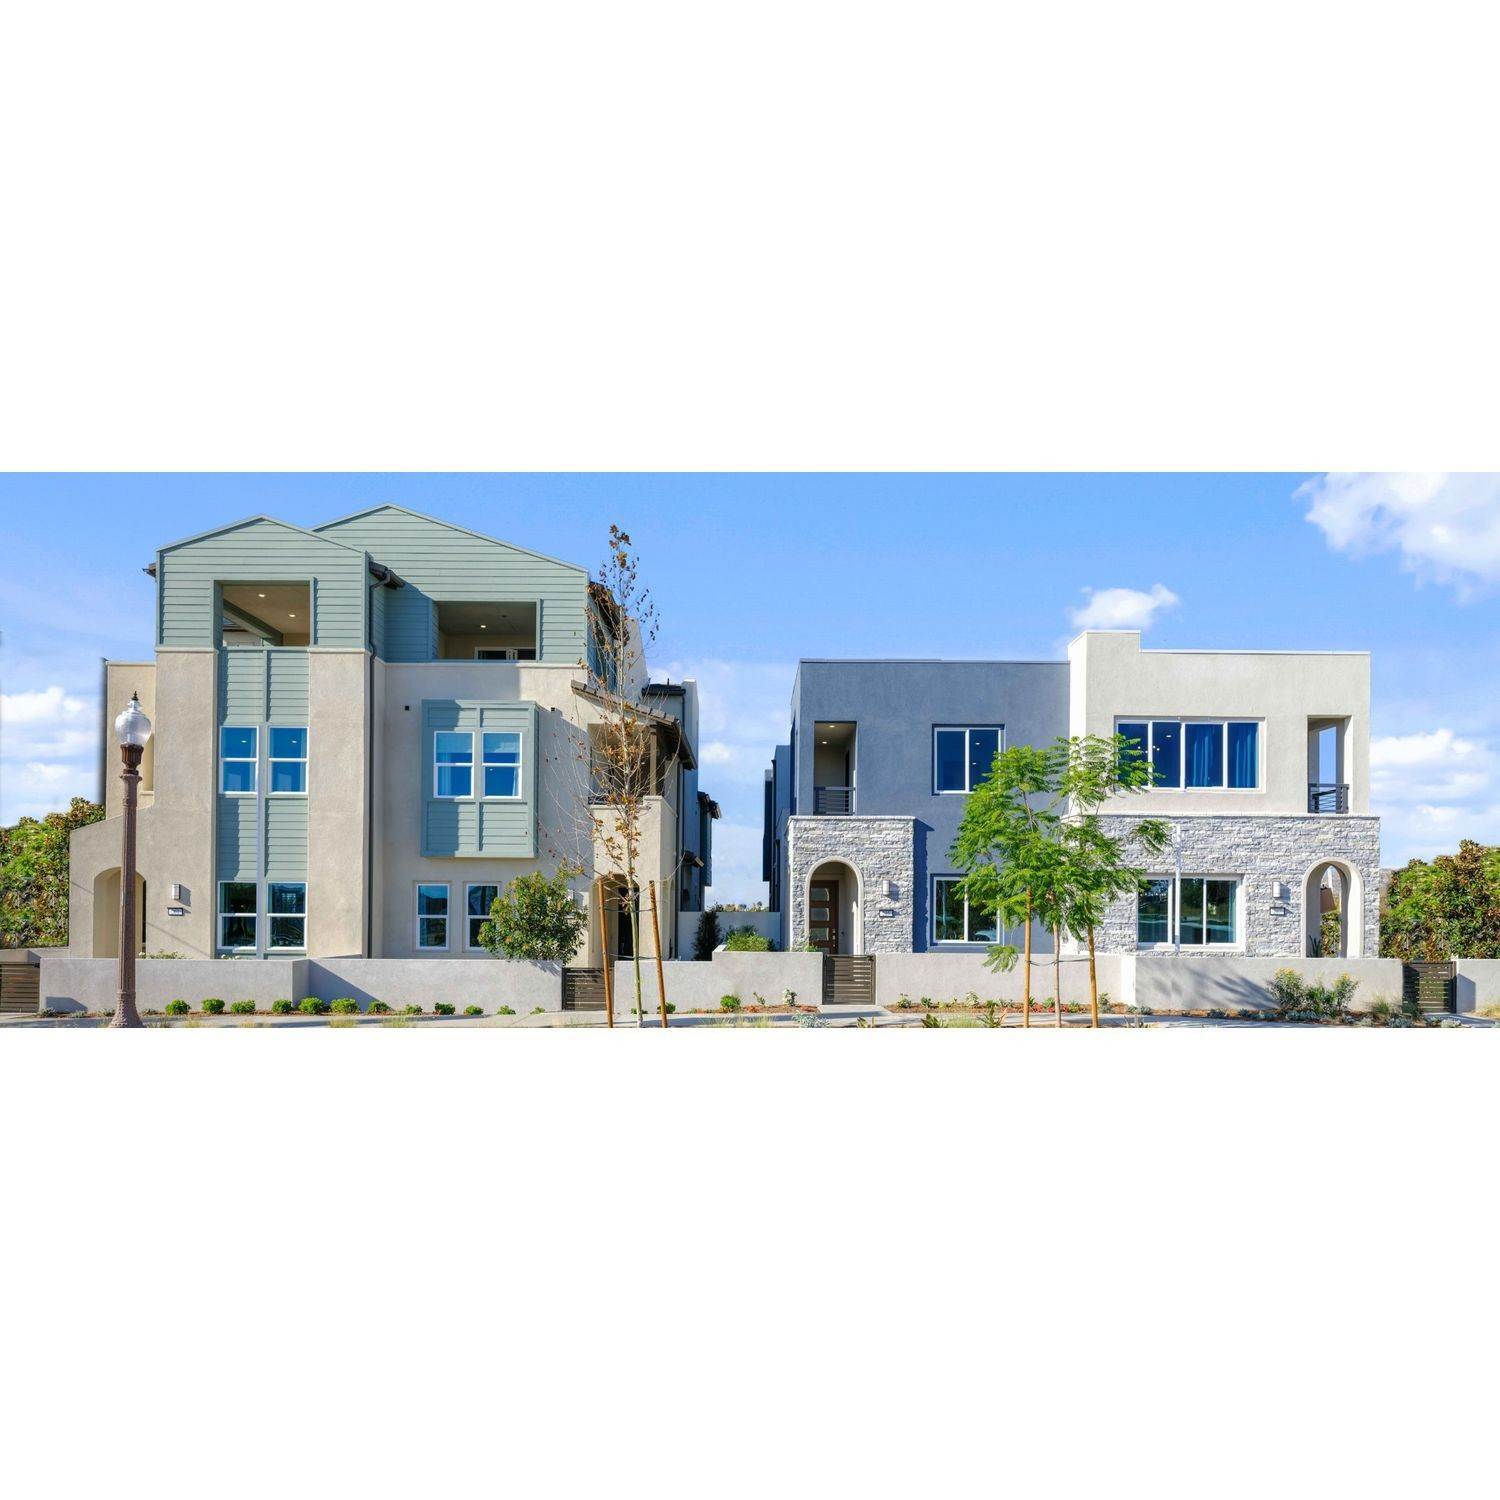 35. Great Park Neighborhoods - Camellia at Solis Park building at 207 Biome, Irvine, Ca, Irvine, CA 92618